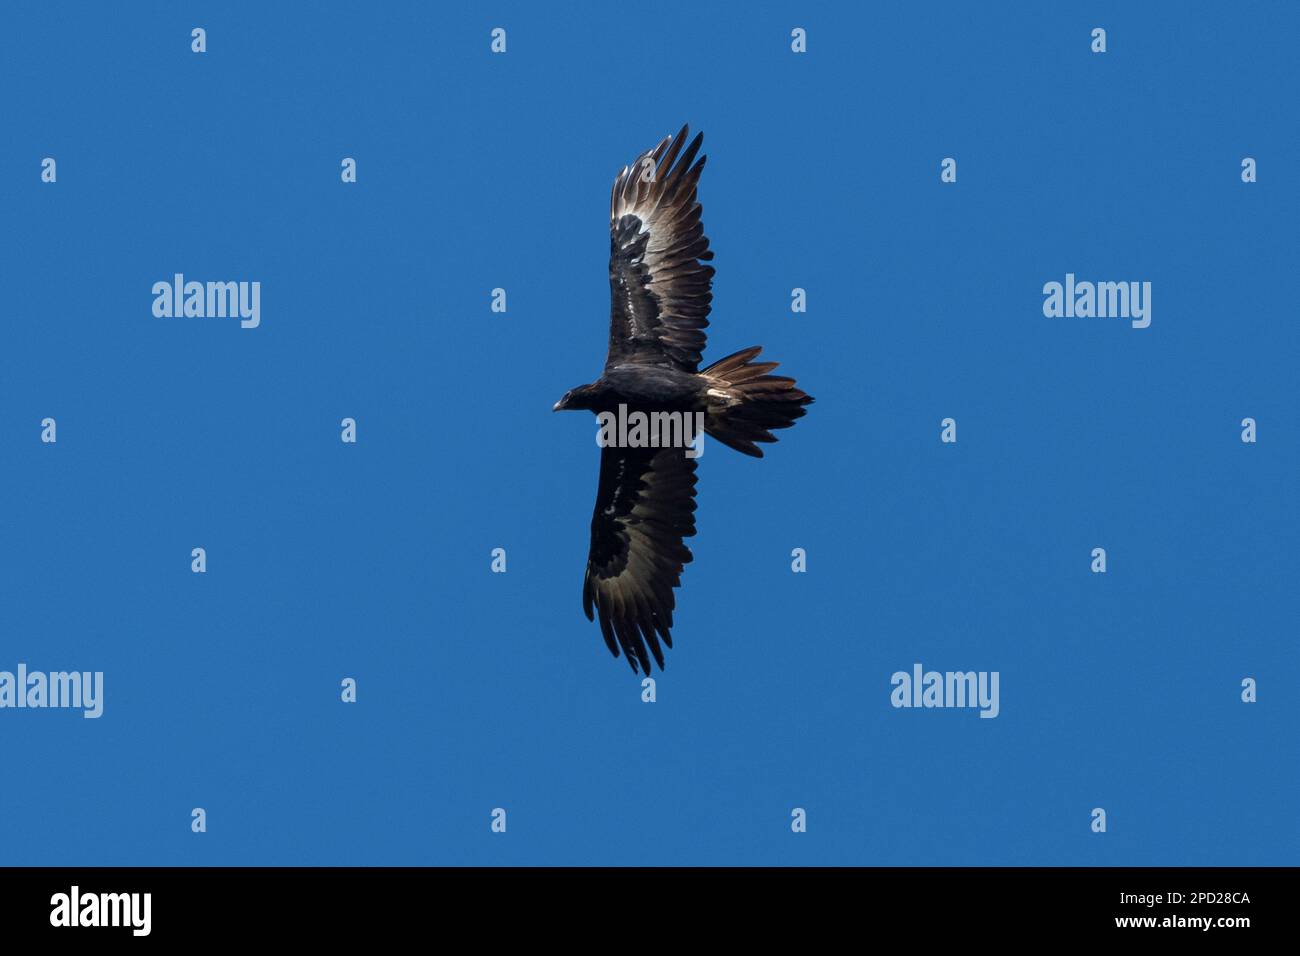 Vision de aguila fotografías e imágenes de alta resolución - Alamy